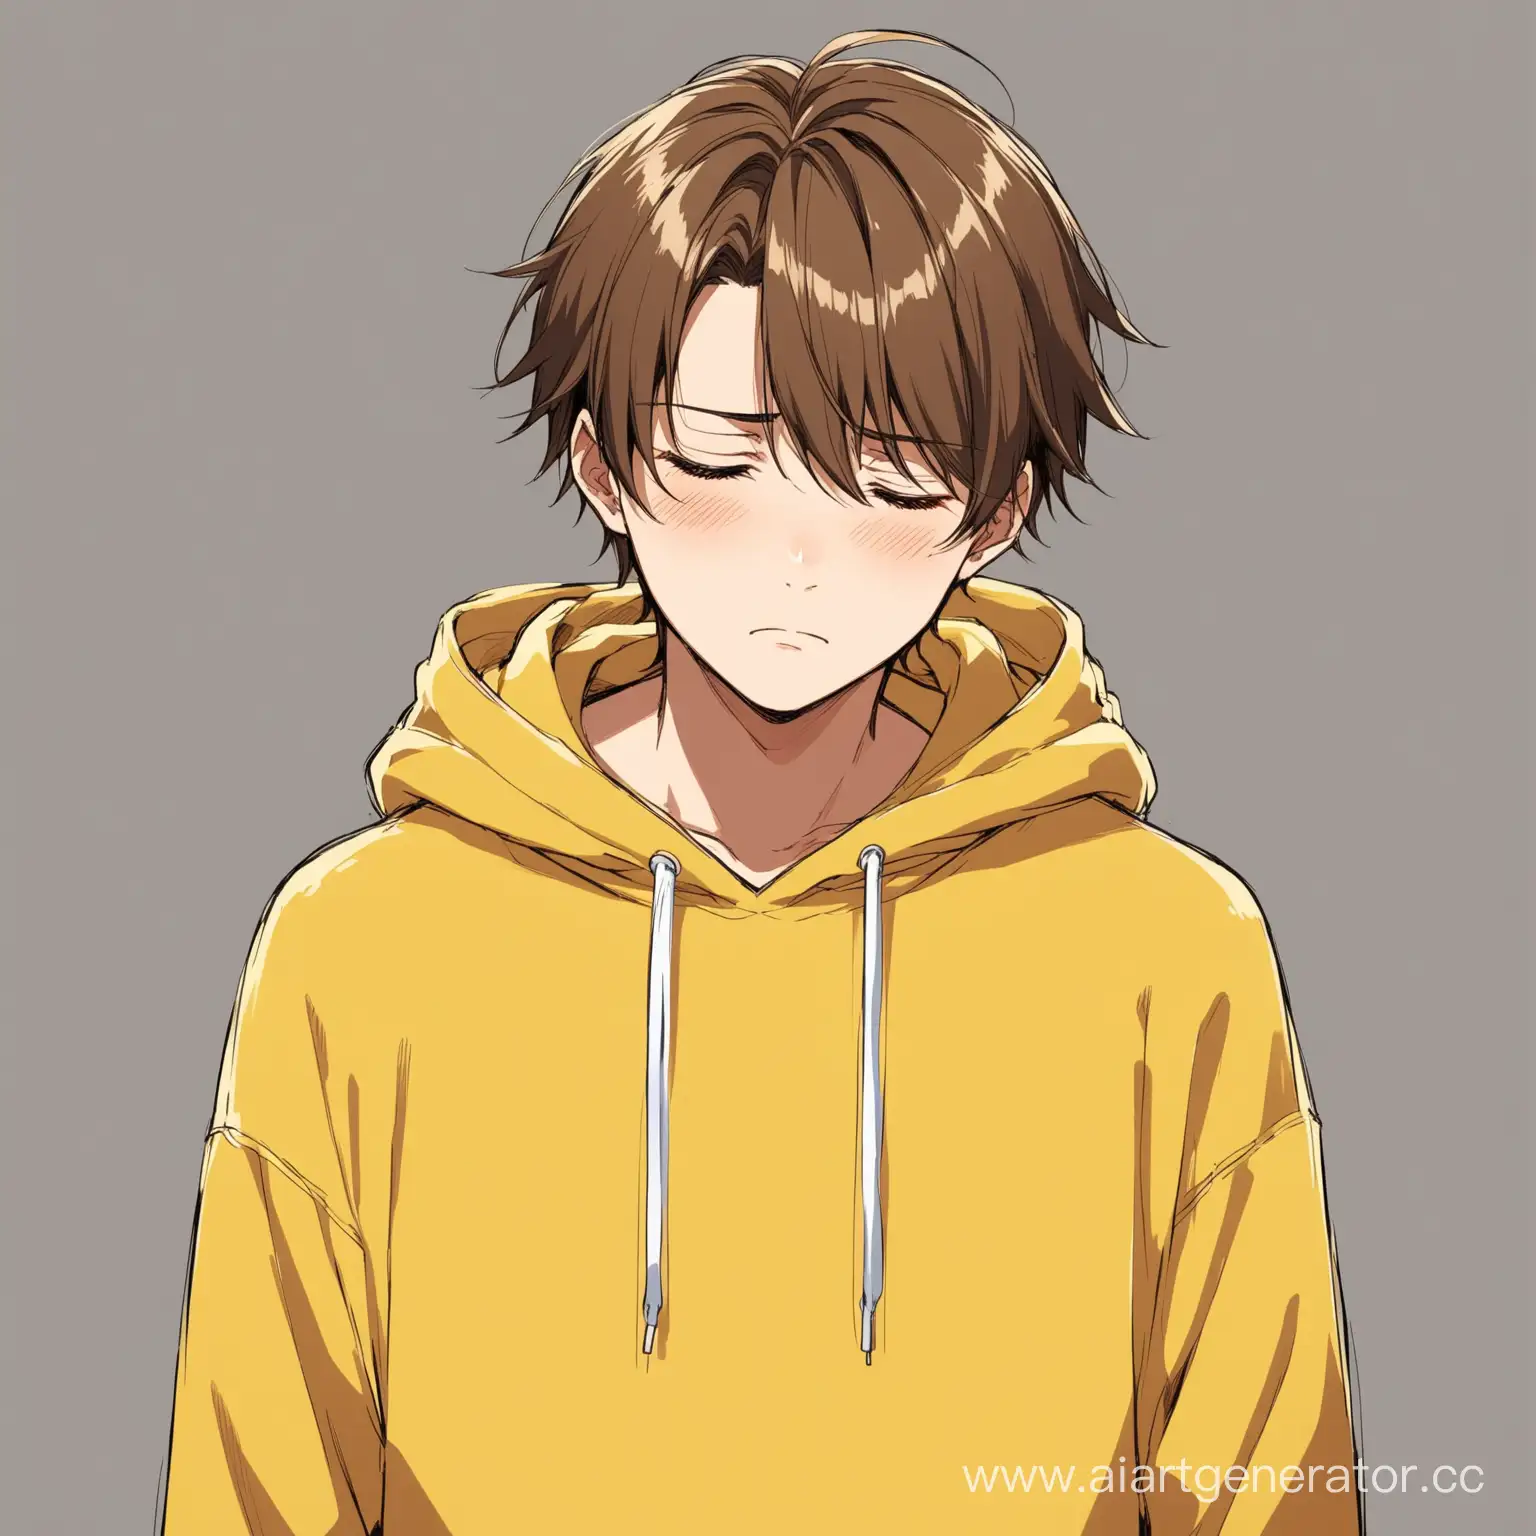 Melancholic-Teenager-in-Yellow-Hoodie-Depressed-Anime-Character-with-Brown-Hair